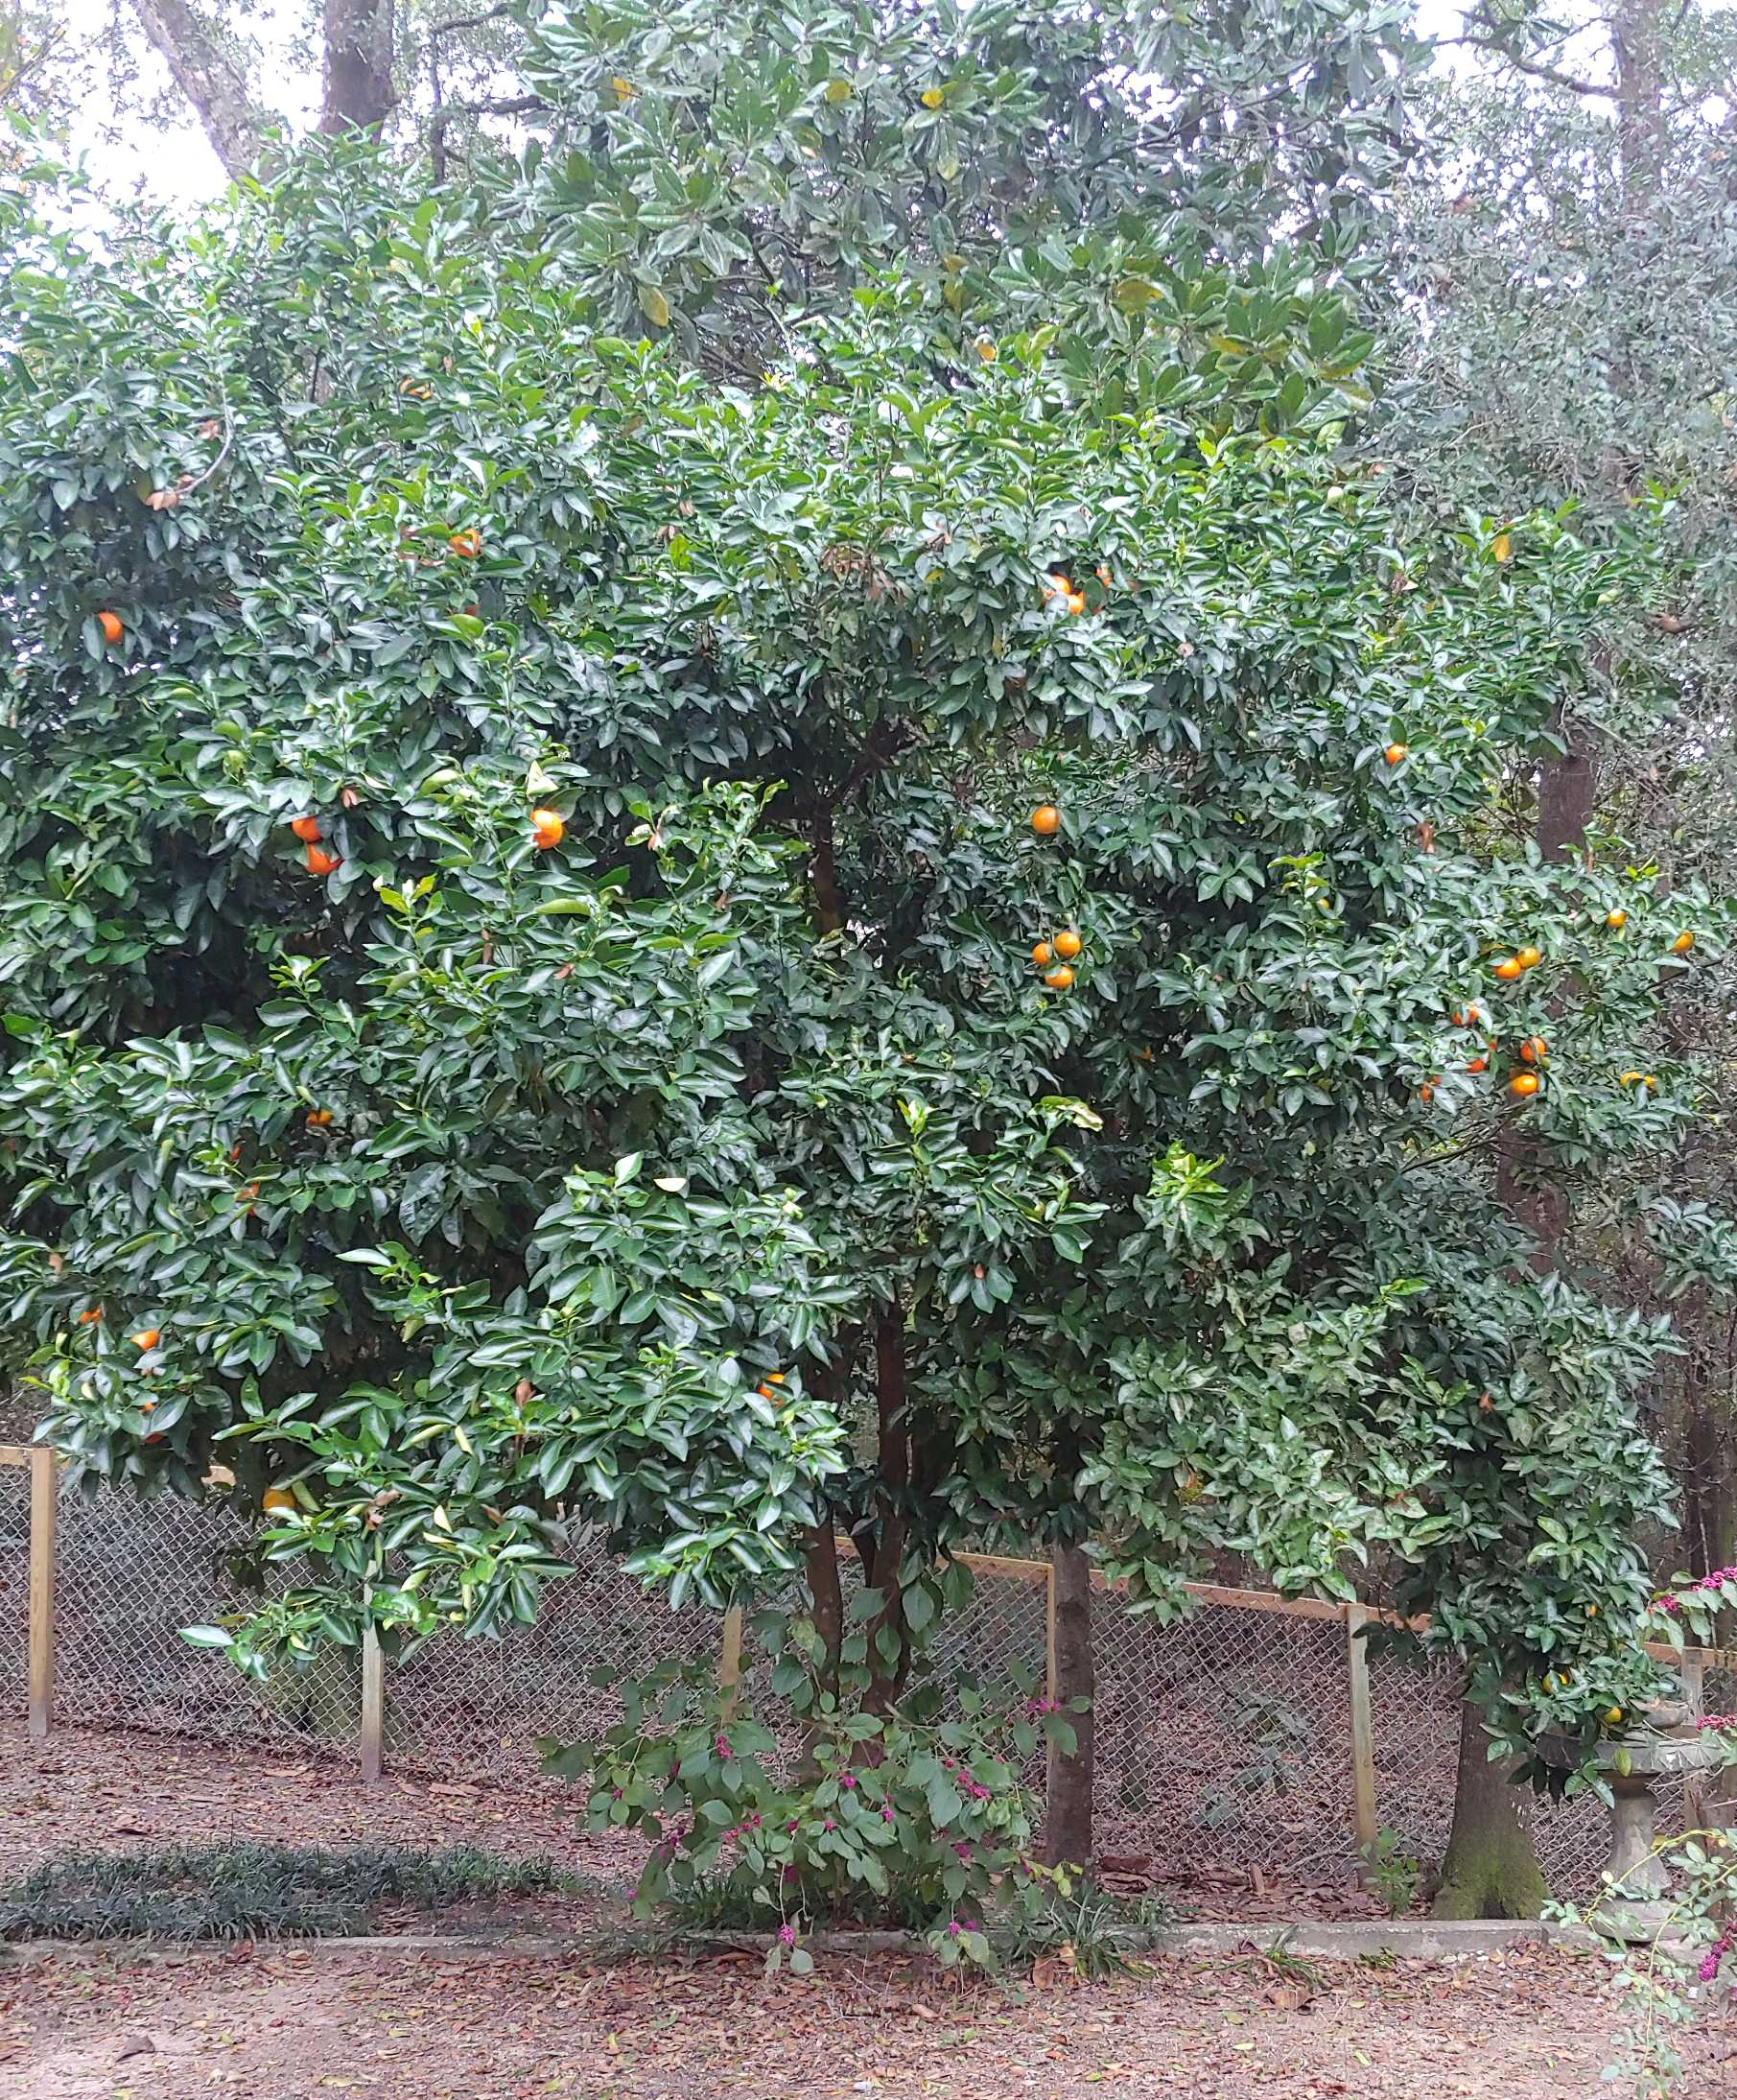 orange tree fruit